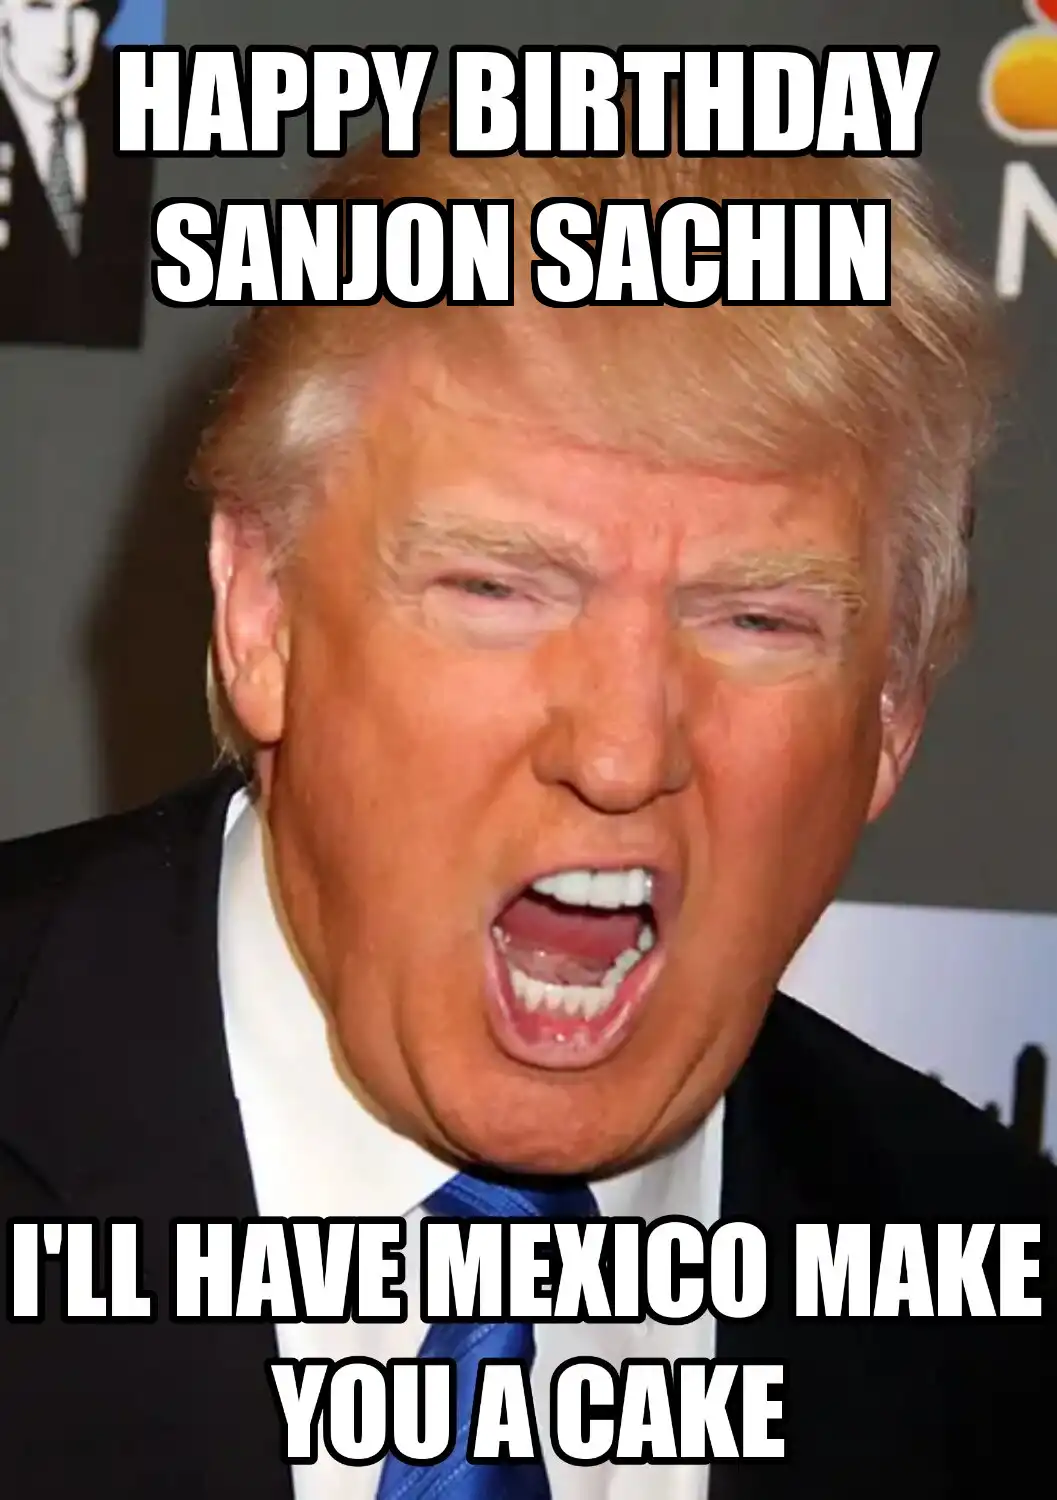 Happy Birthday Sanjon sachin Mexico Make You A Cake Meme